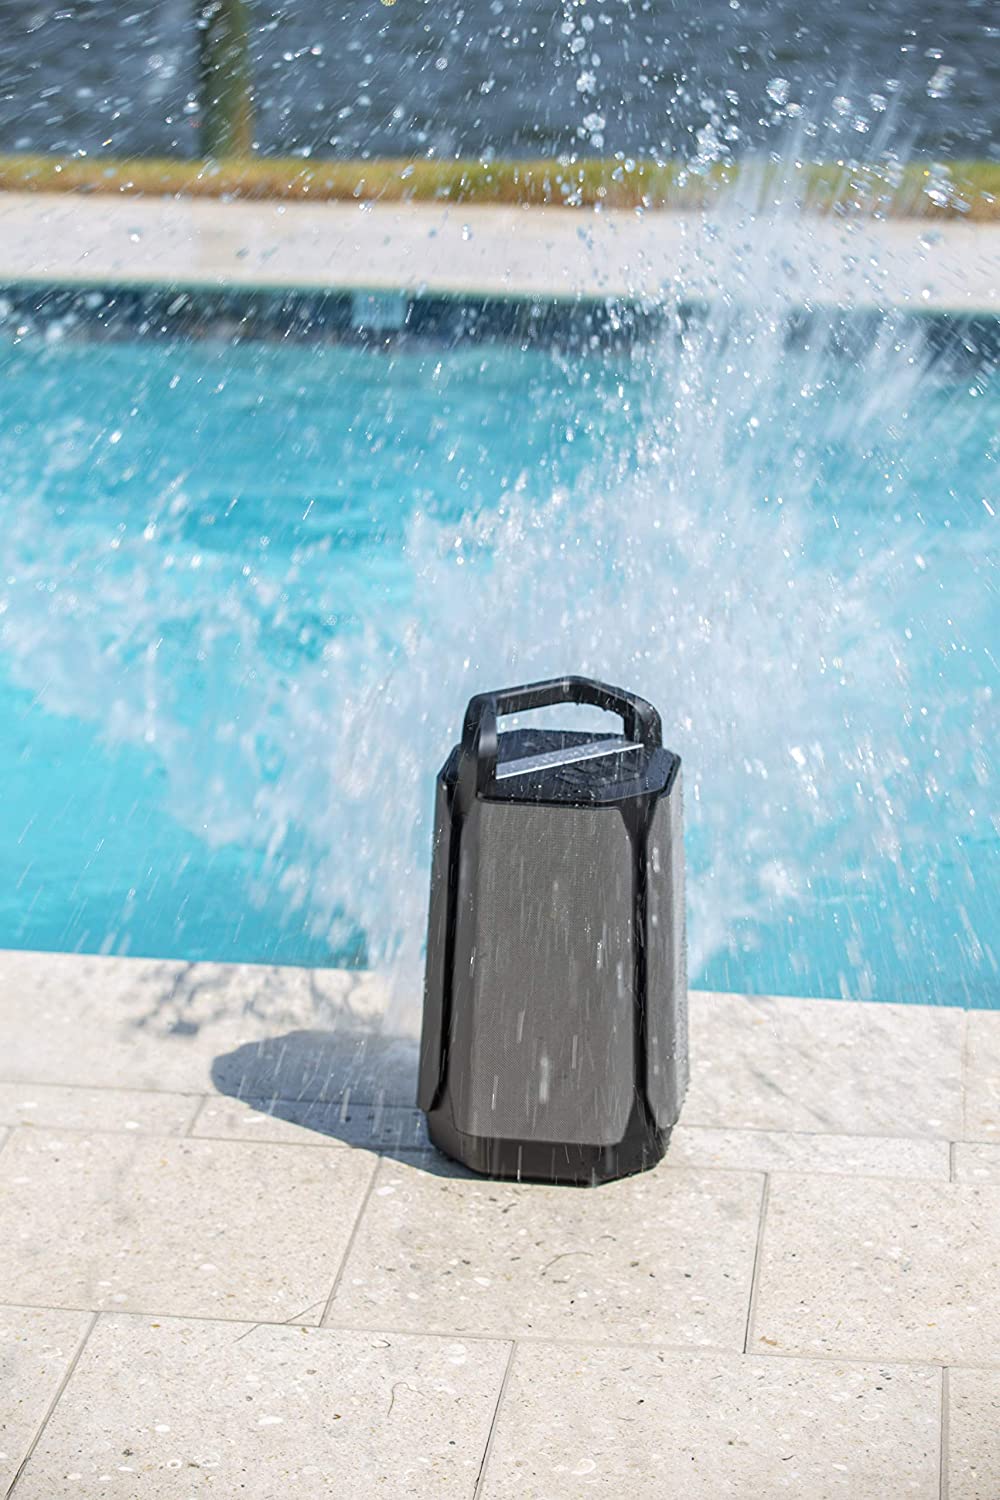 Soundcast VG7 Waterproof Portable Bluetooth Speaker Gray/Black